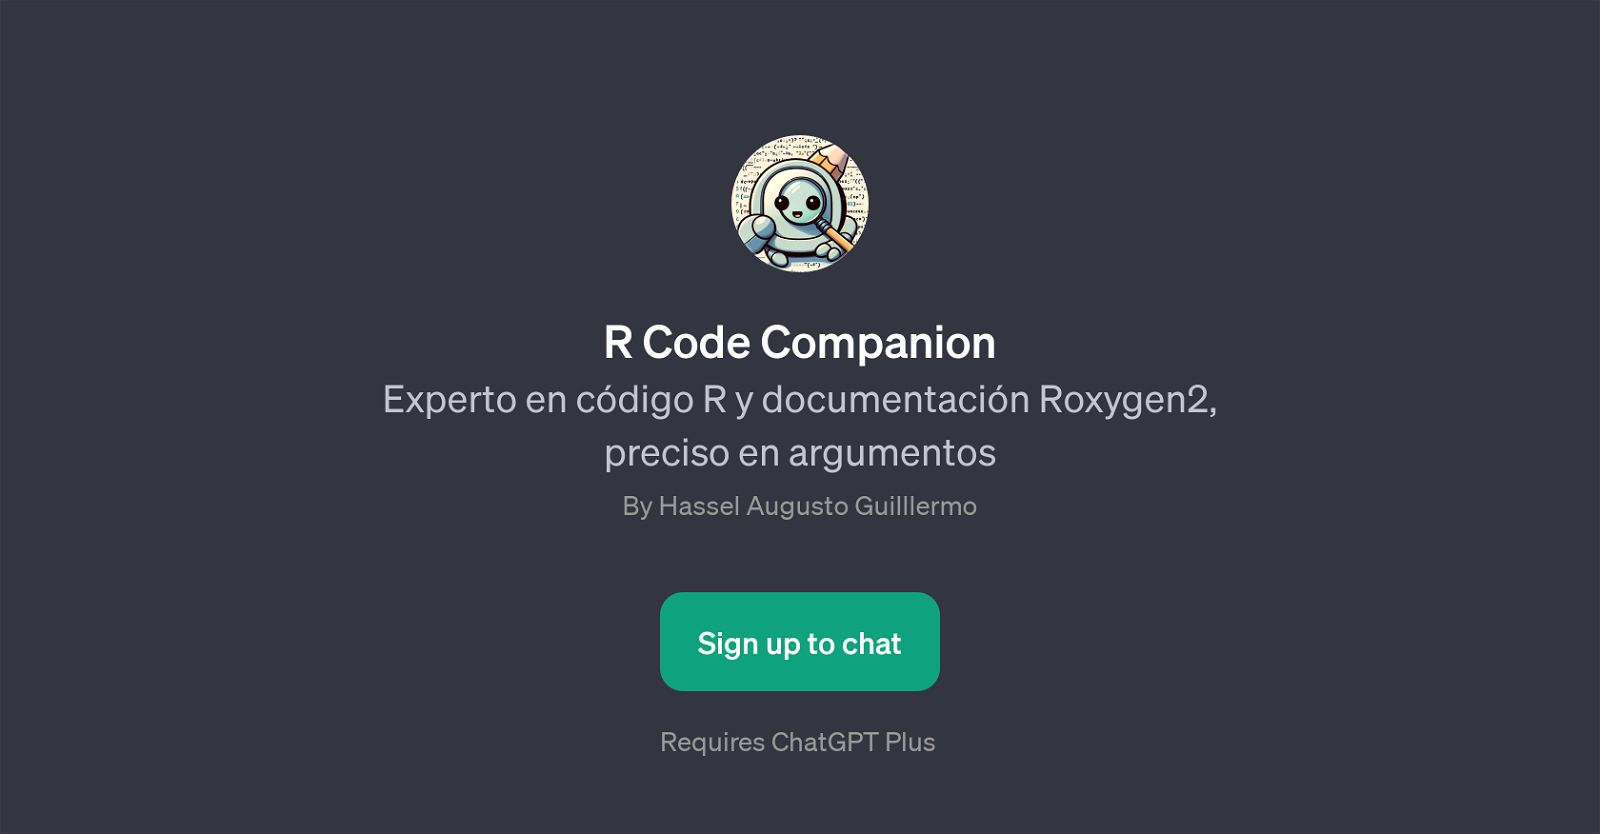 R Code Companion website